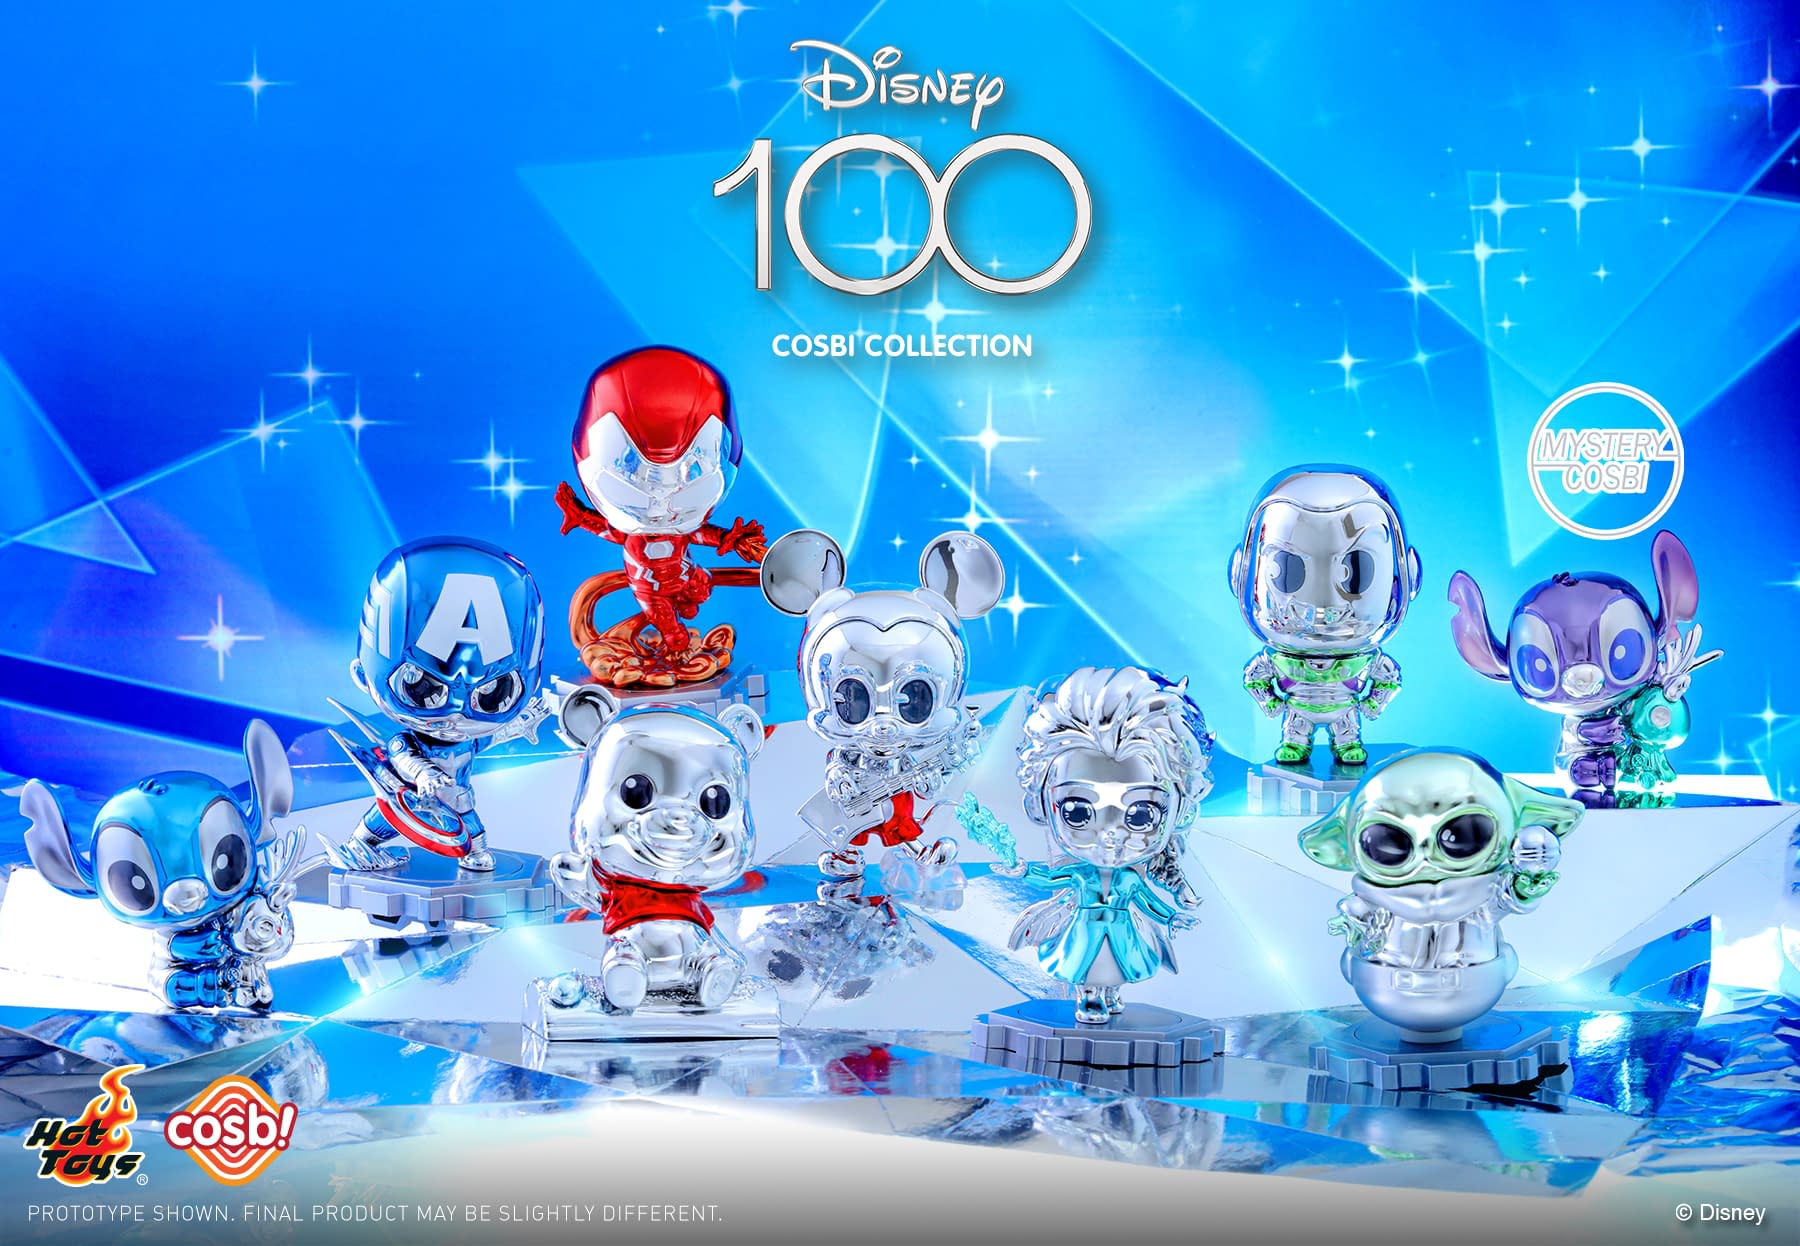 Hot Toys Unveils New Disney 100 Platinum Color Cosbi Collection0